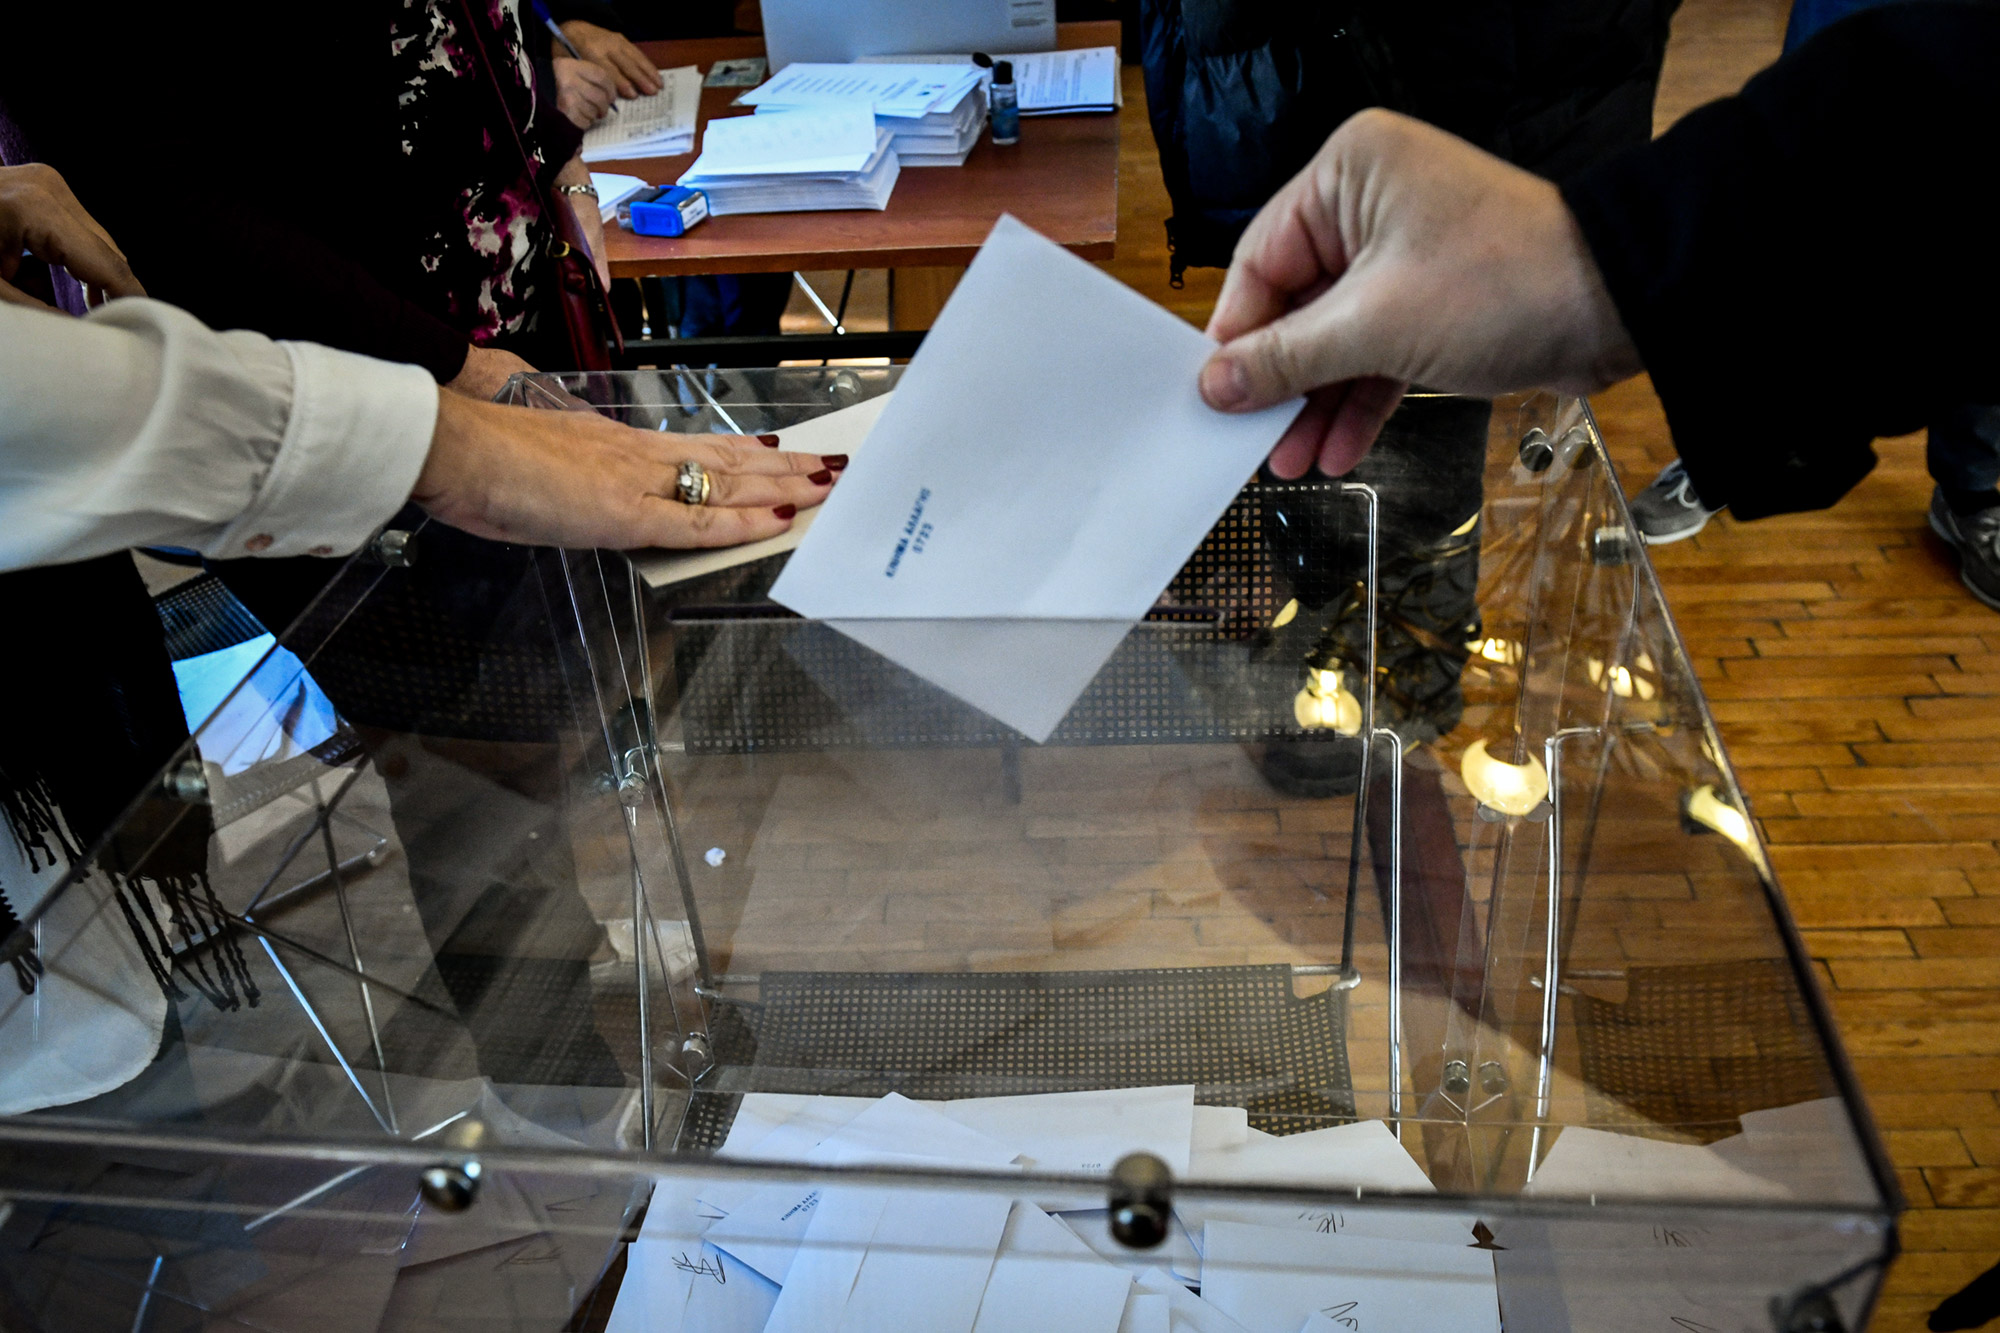 Tην 9η Απριλίου διαρρέει το Μαξίμου ως την επικρατέστερη ημερομηνία των εθνικών εκλογών